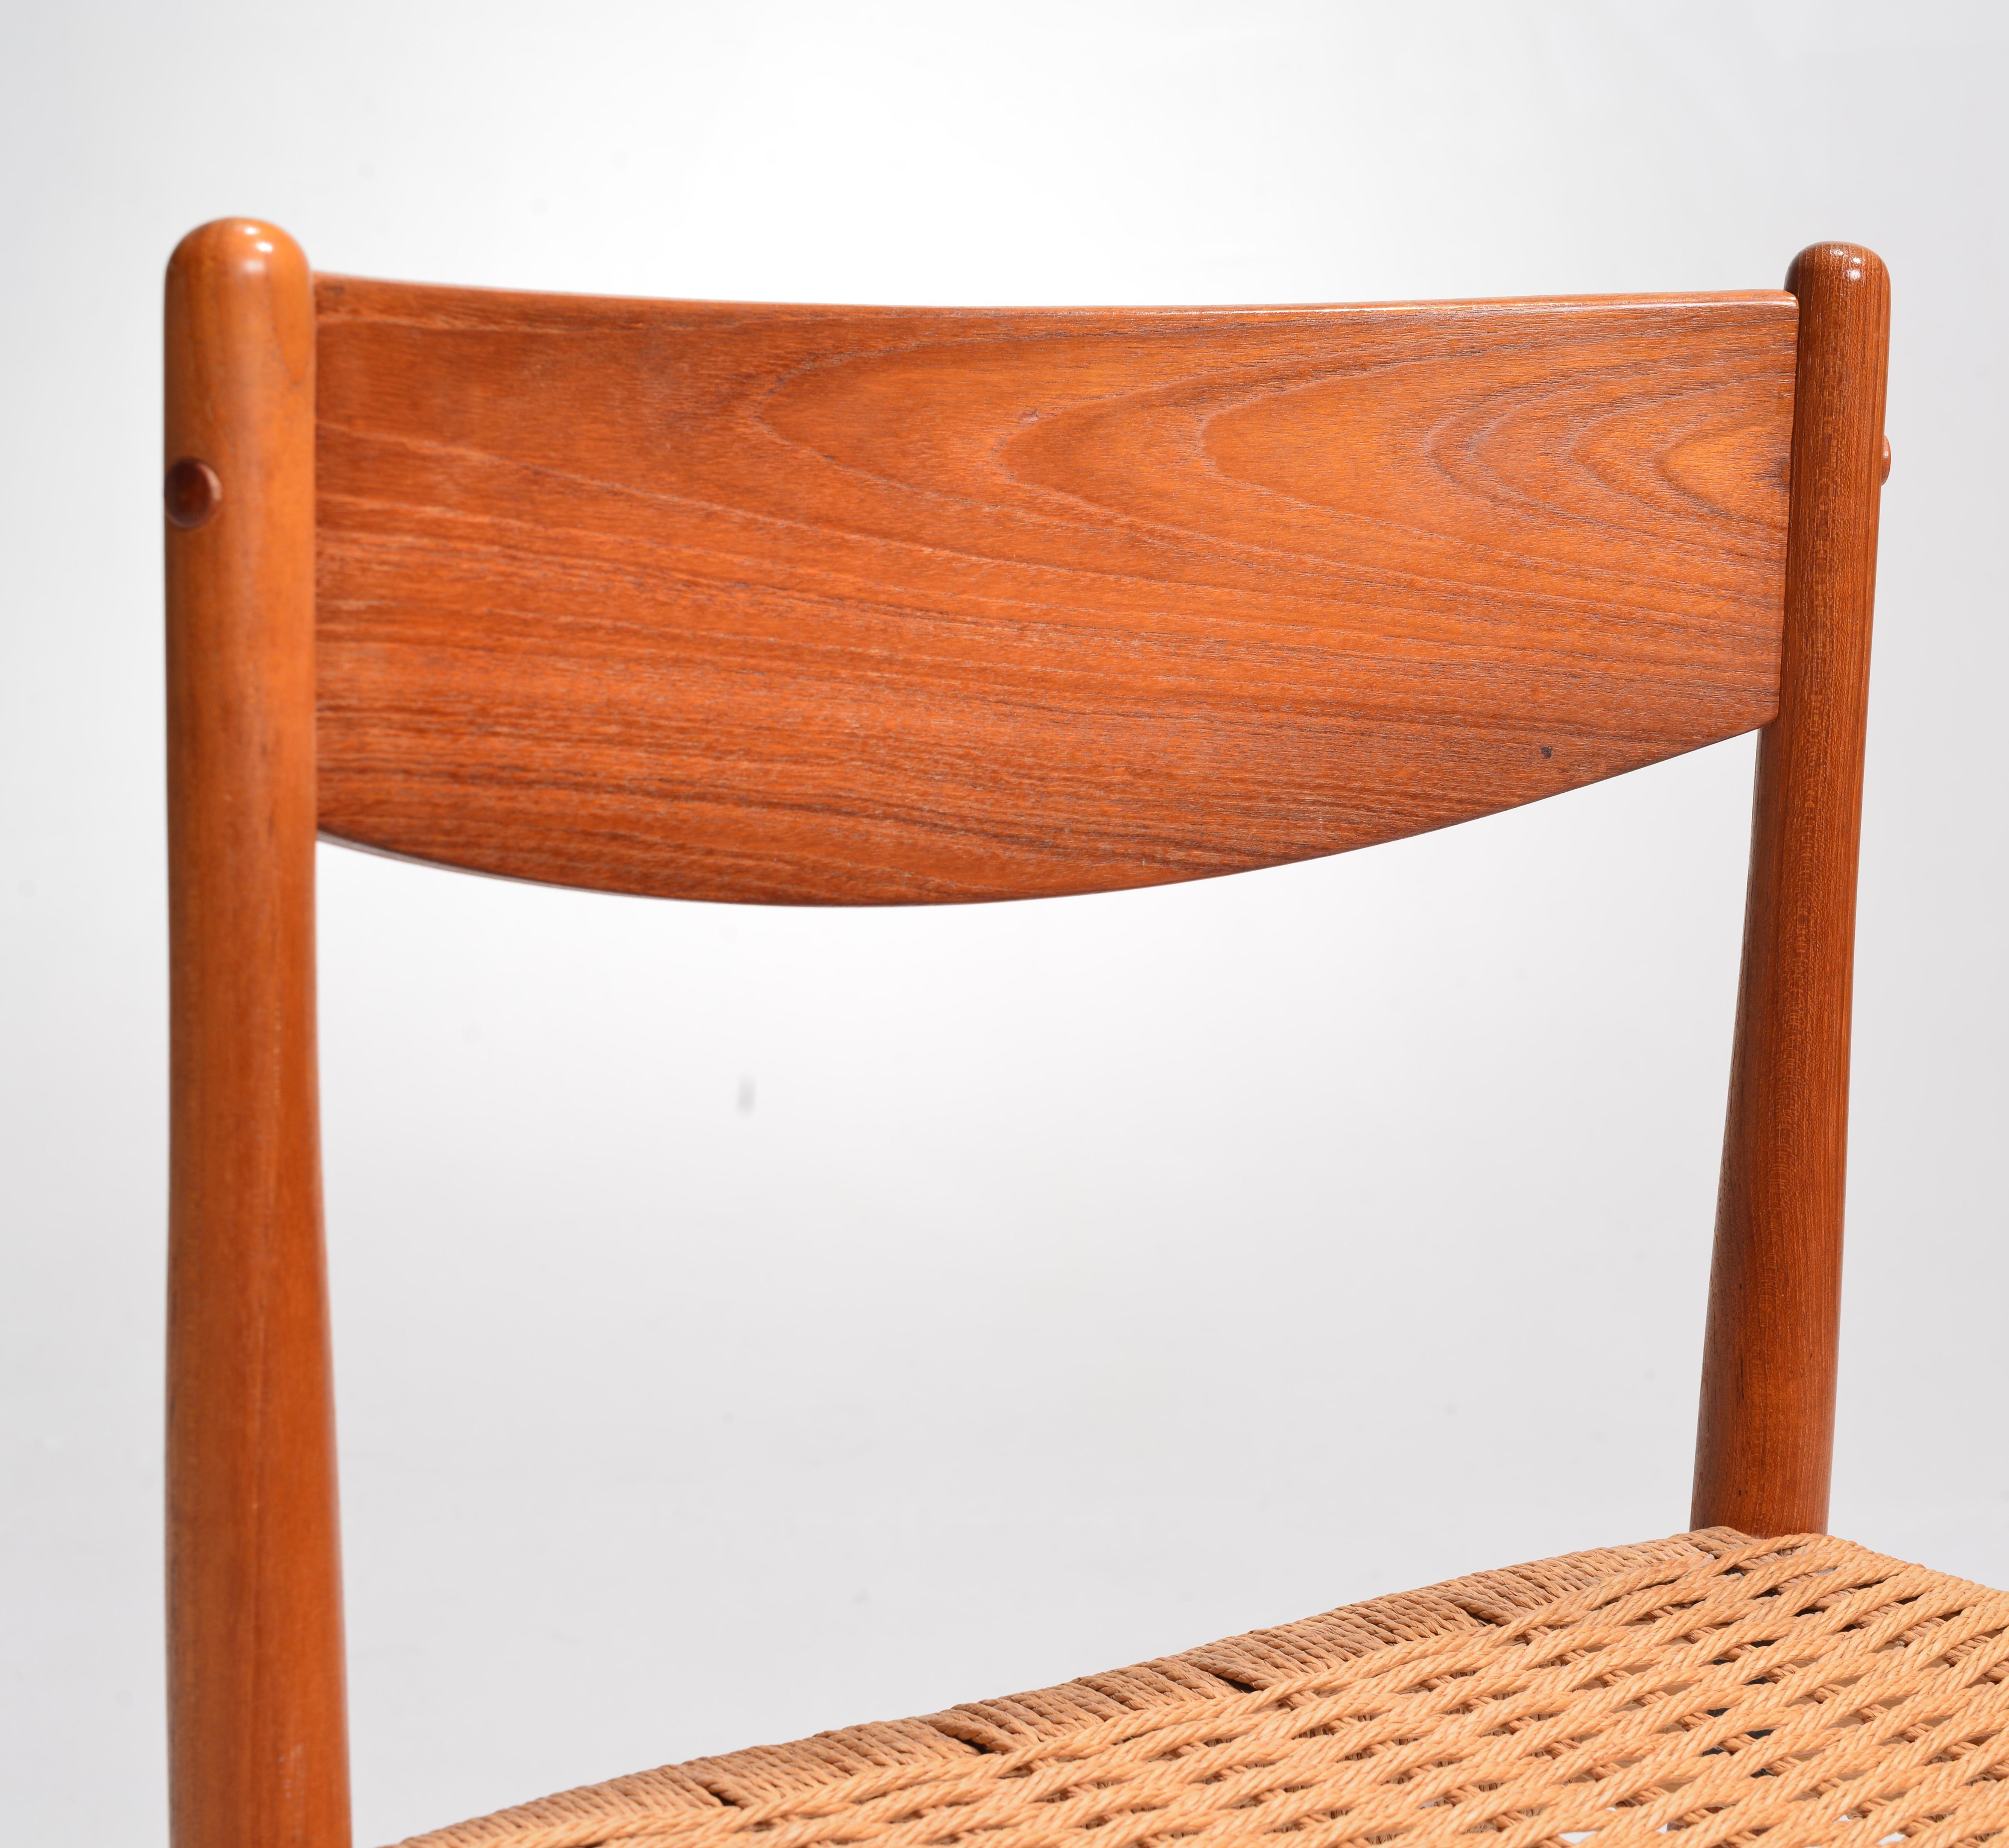 Poul Volther for Frem Rojle Danish Teak Woven Chair Midcentury 1960s For Sale 5